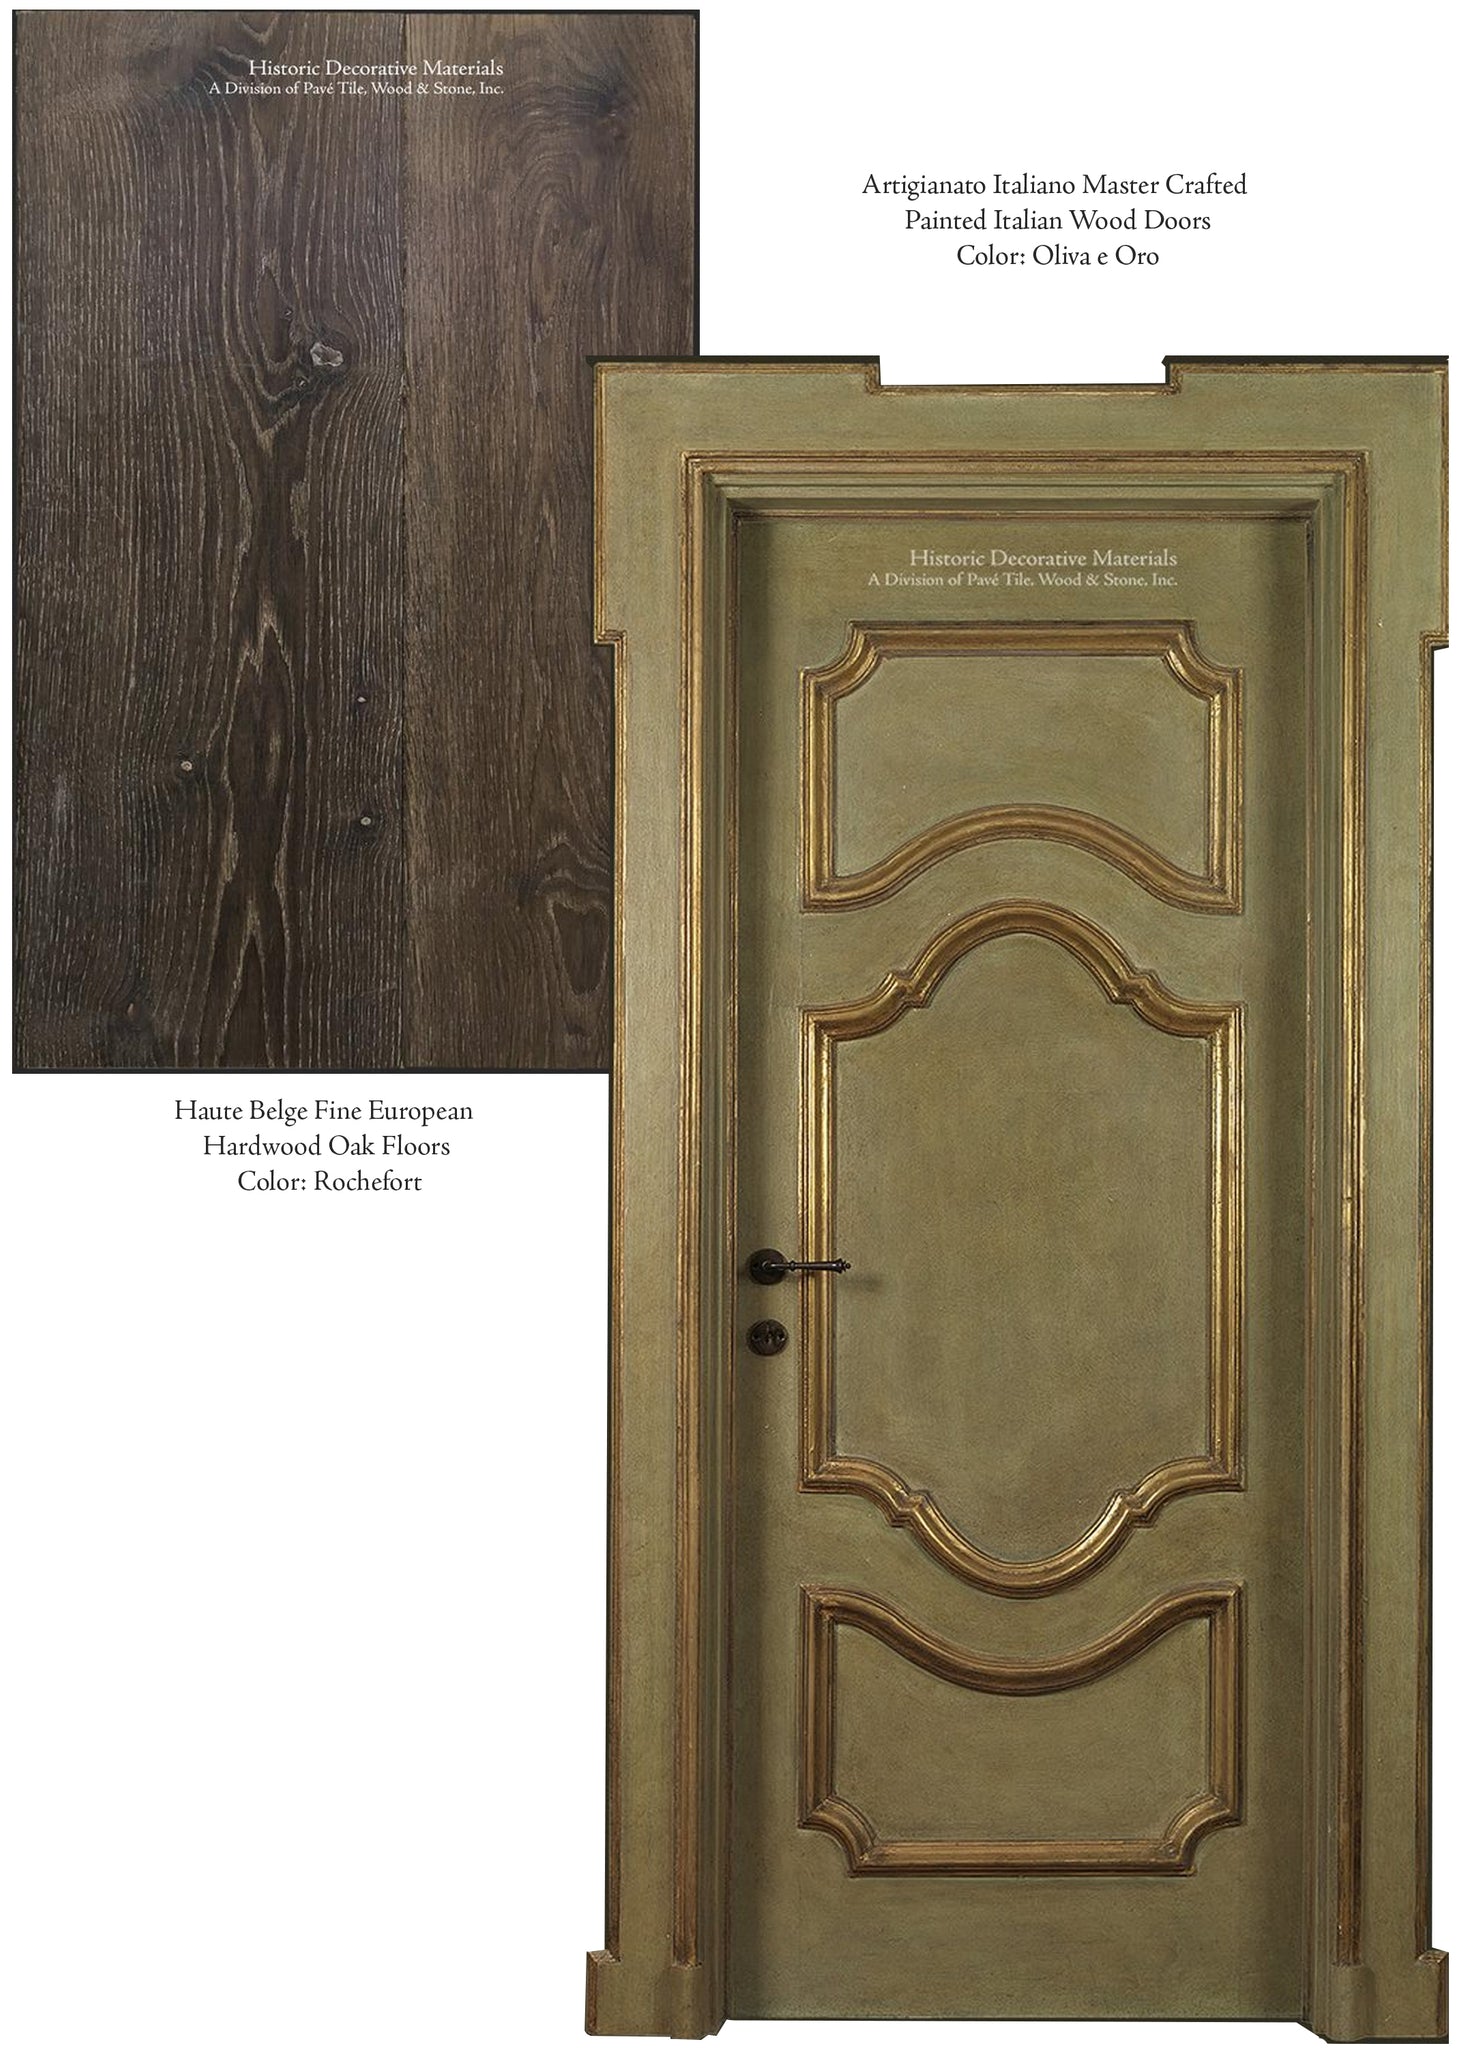 Hardwood European oak Floor and Italian Hand Painted Wood Doors